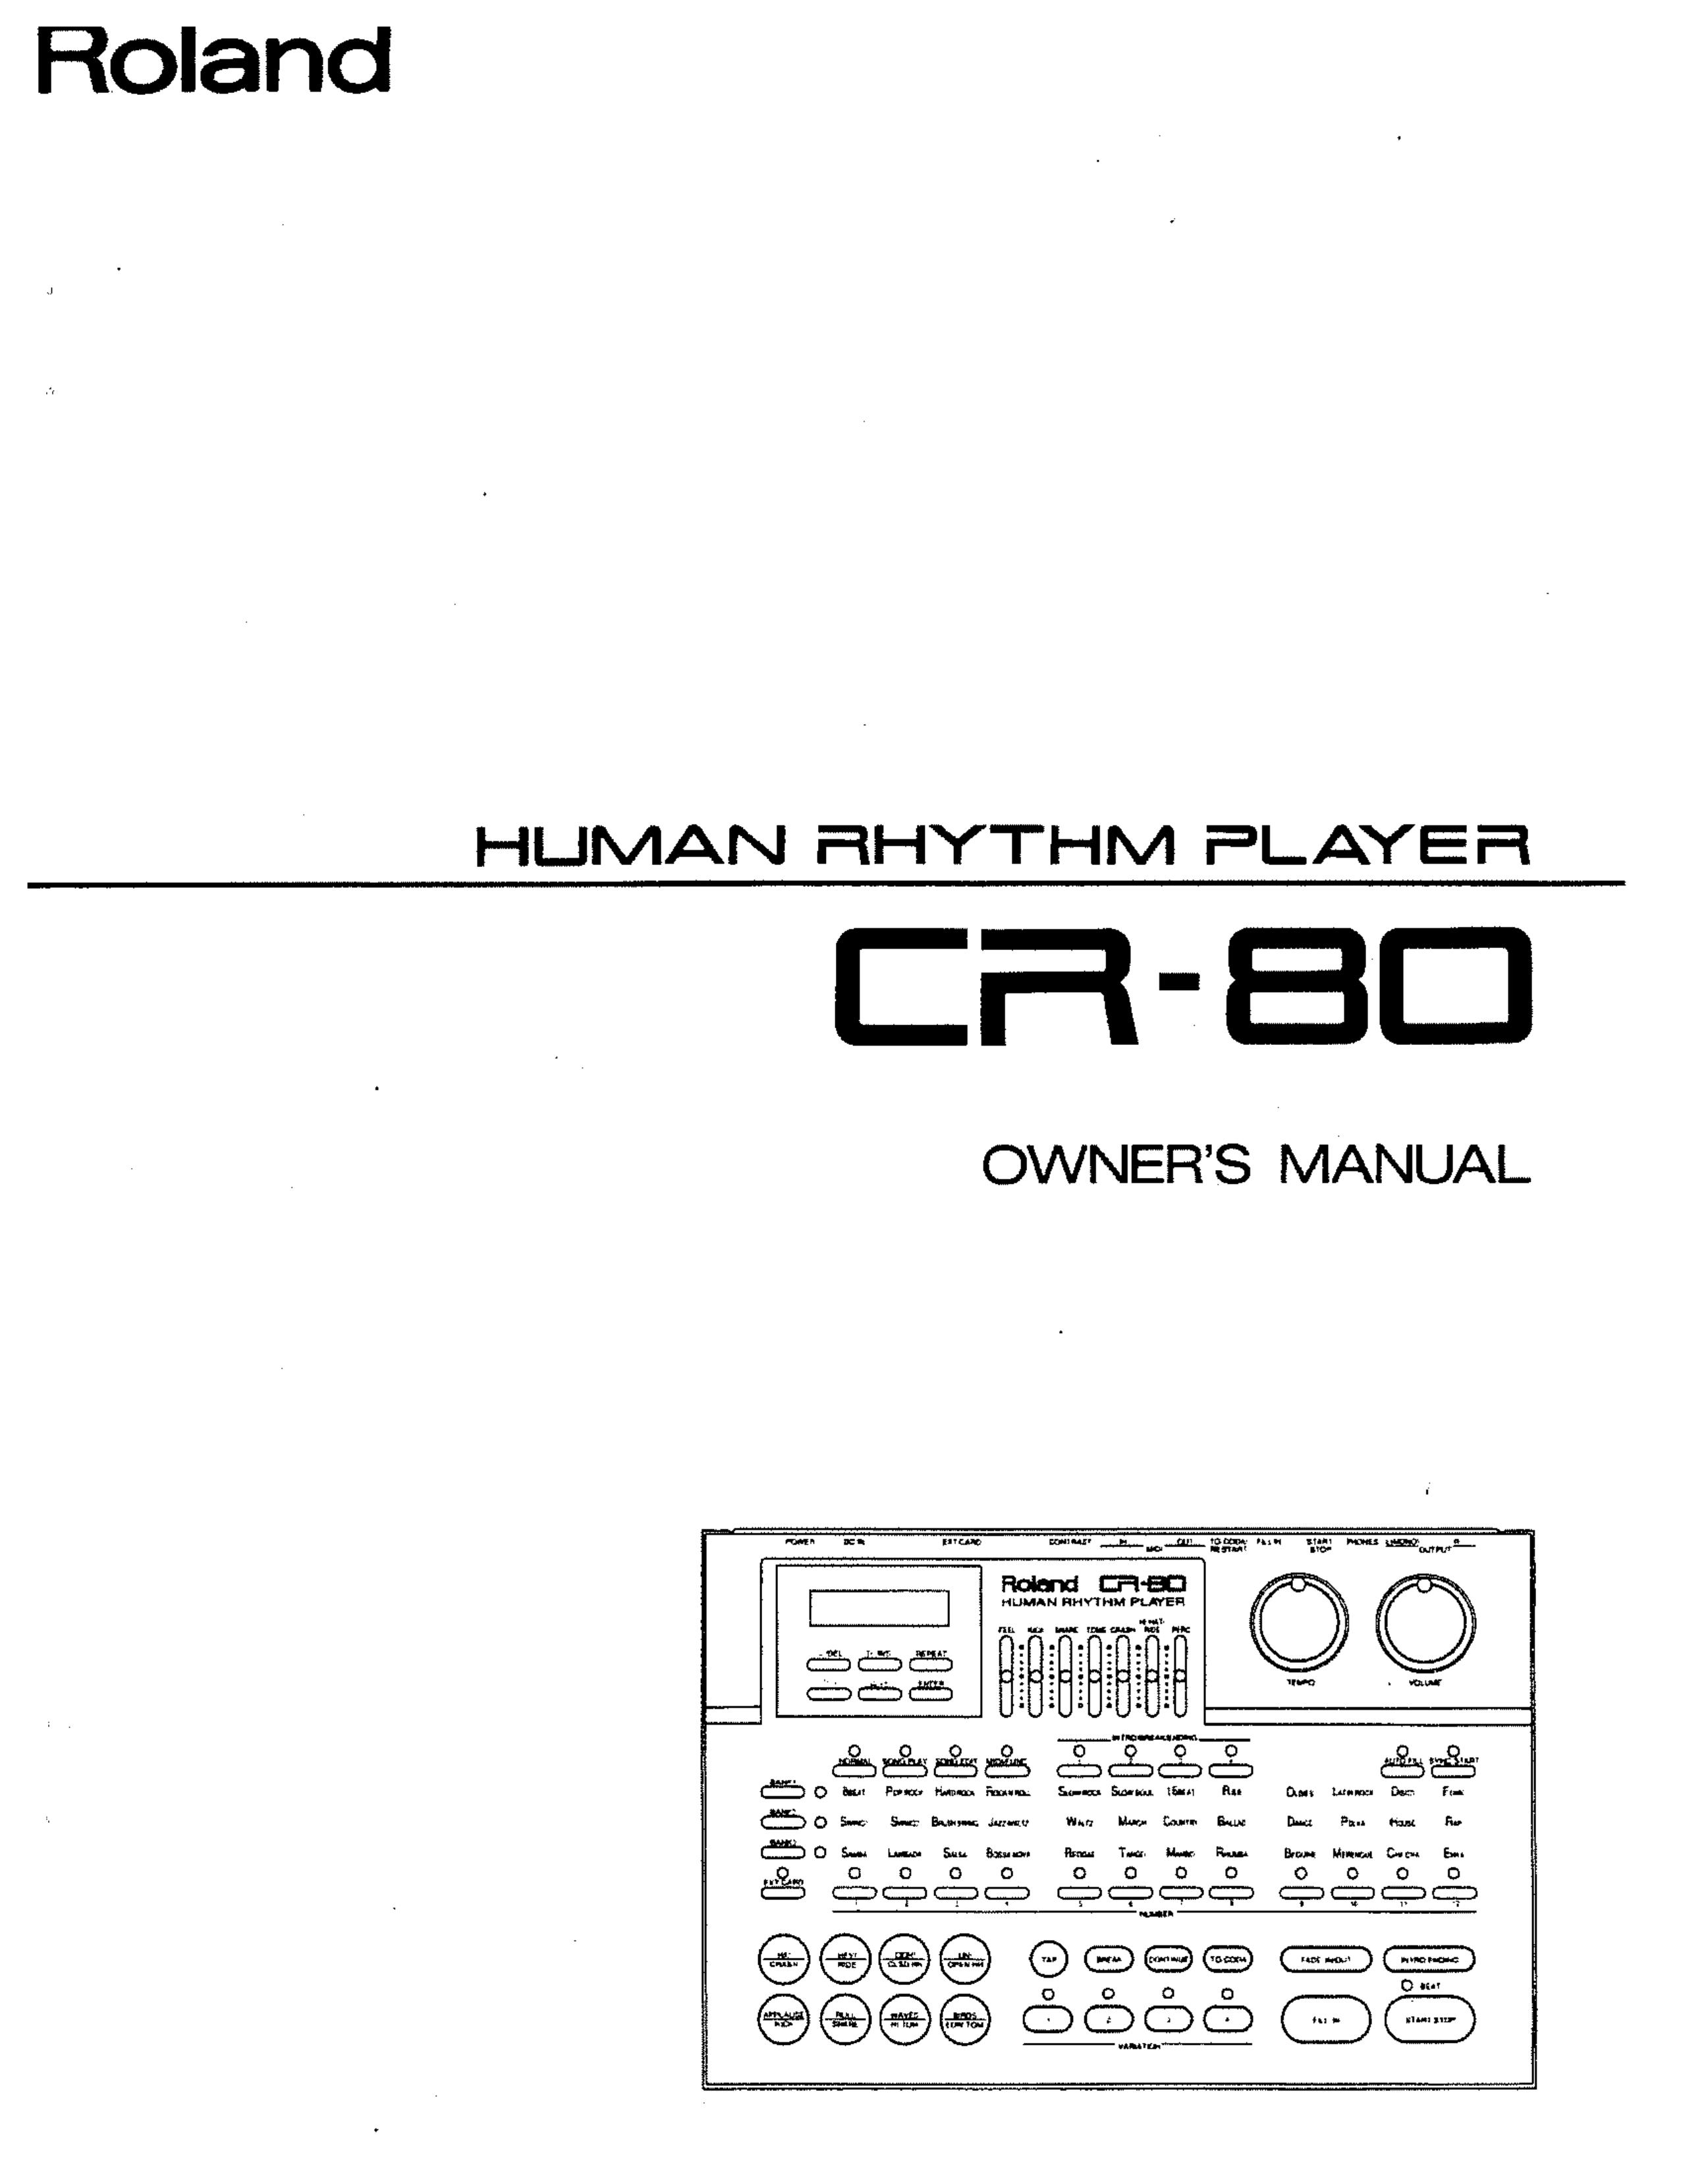 Roland cr-80 Marine Lighting User Manual